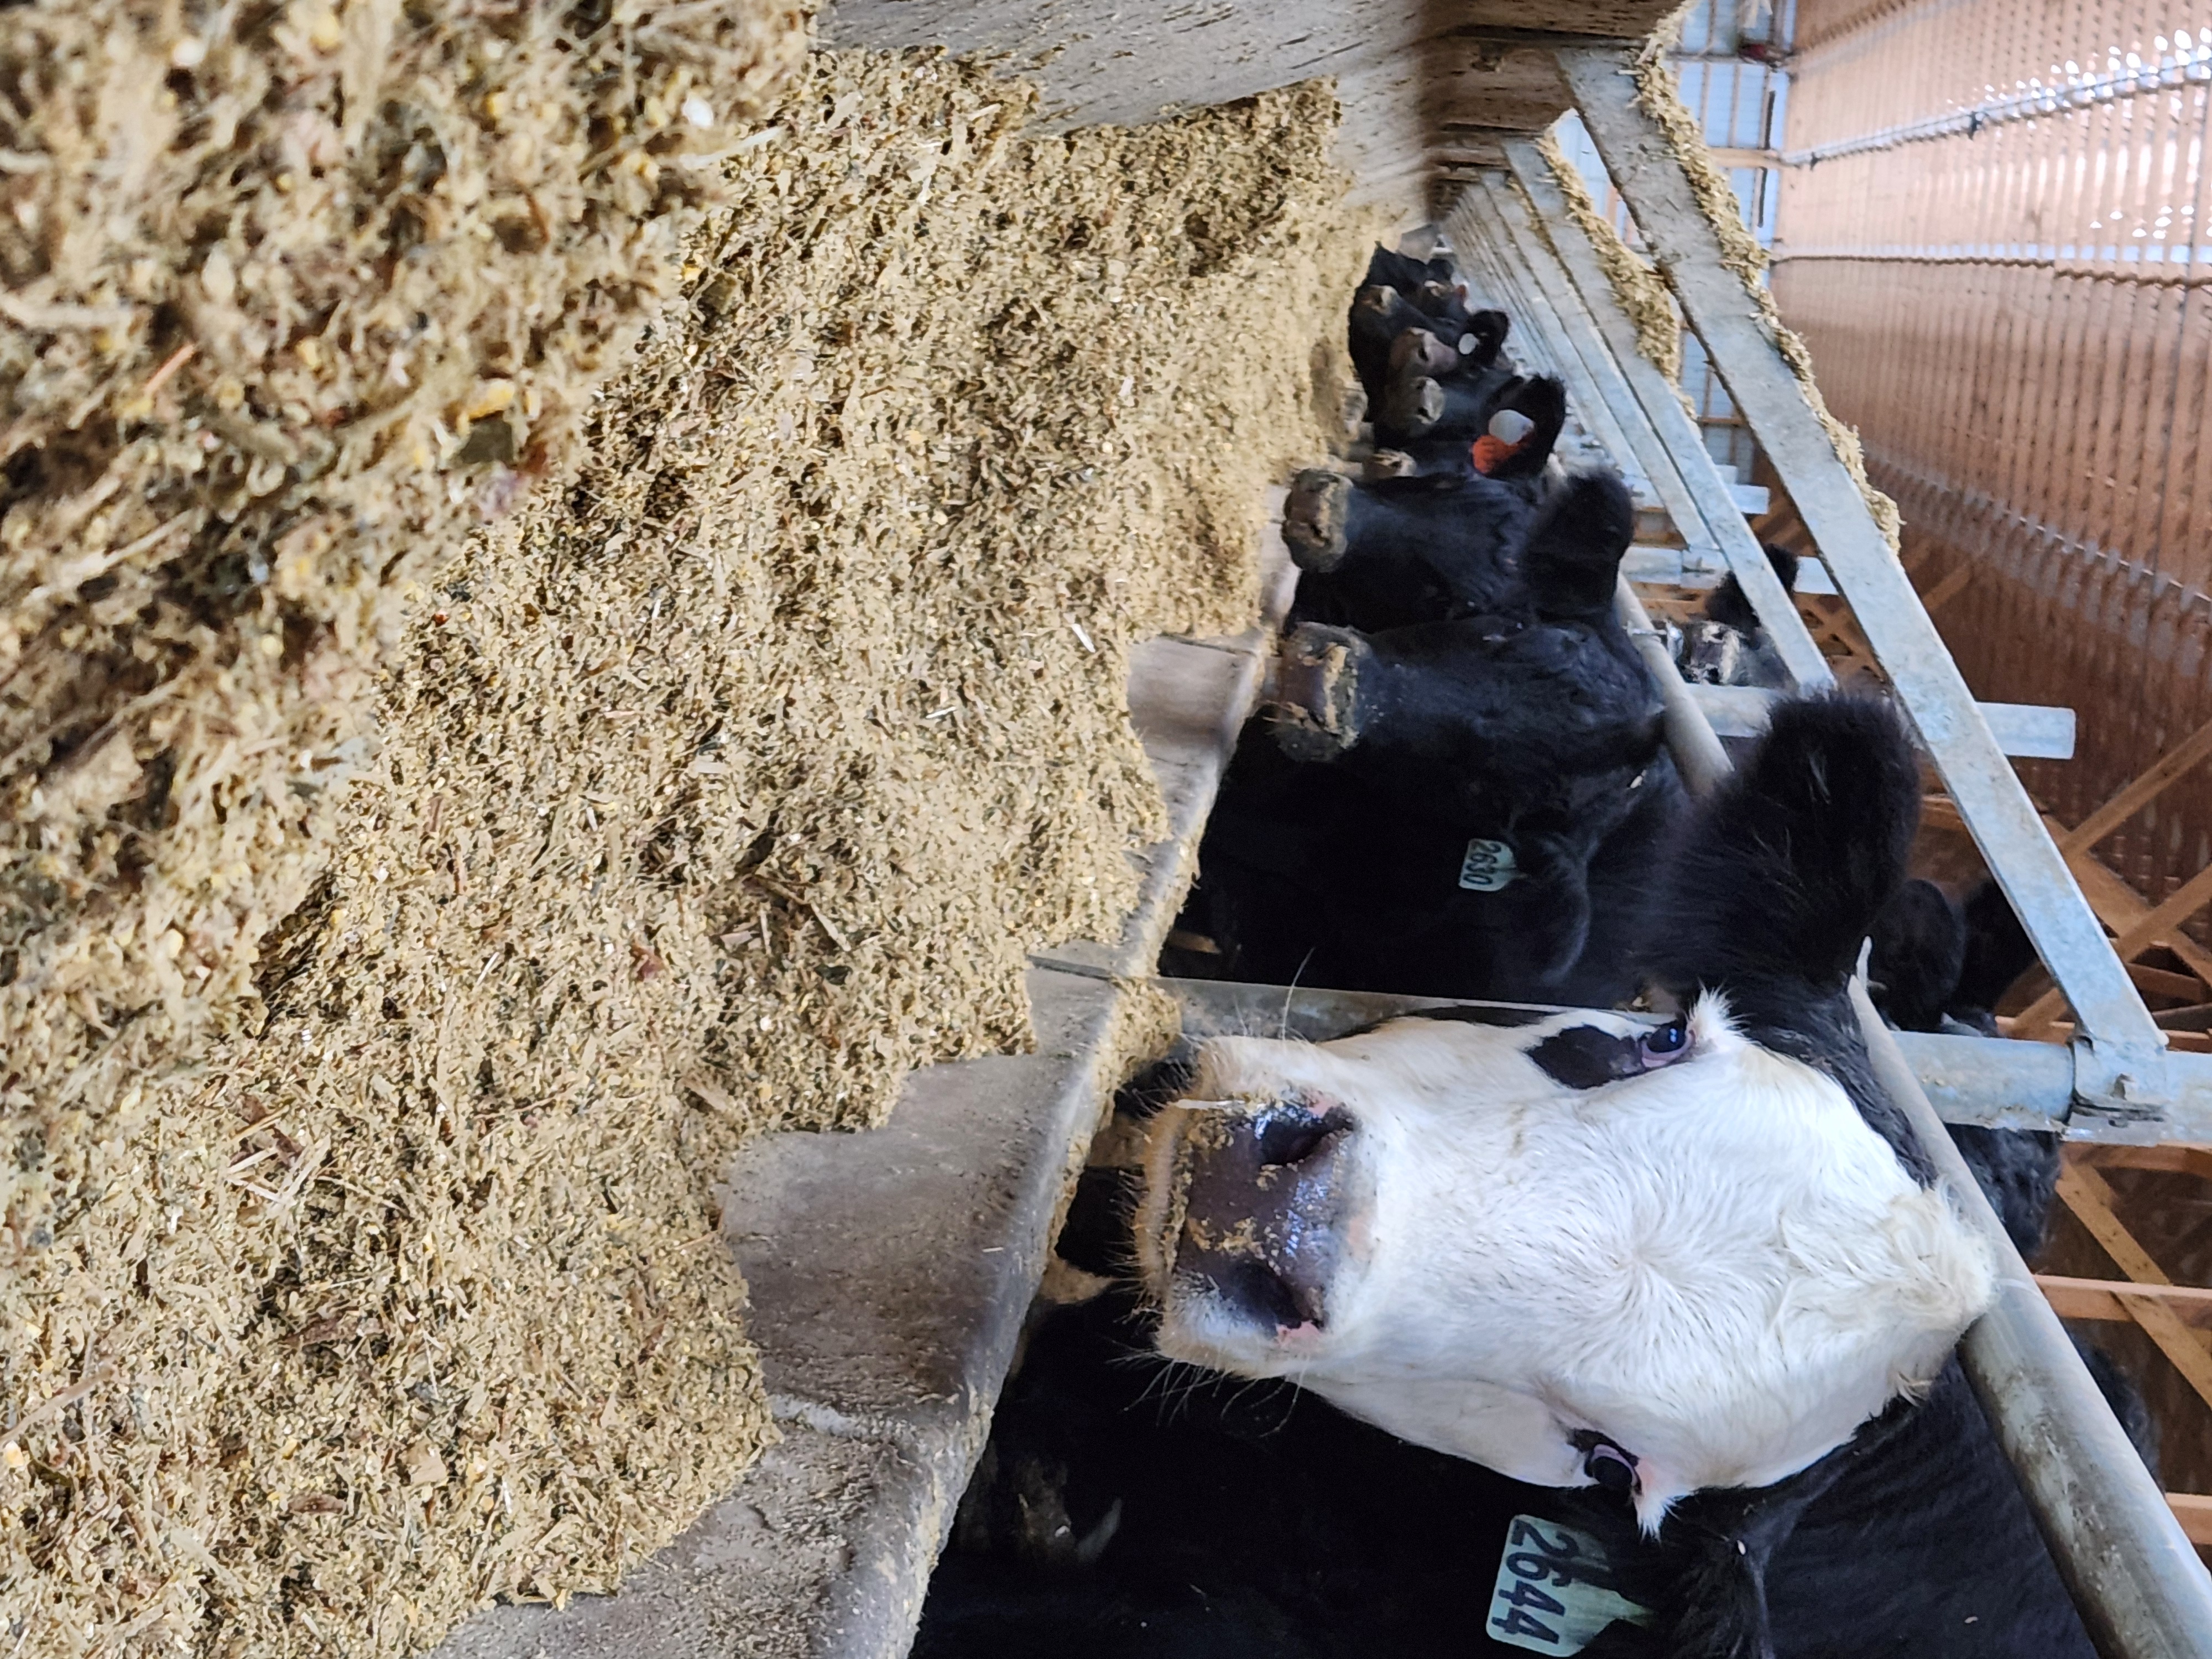 Steers at feed bunk